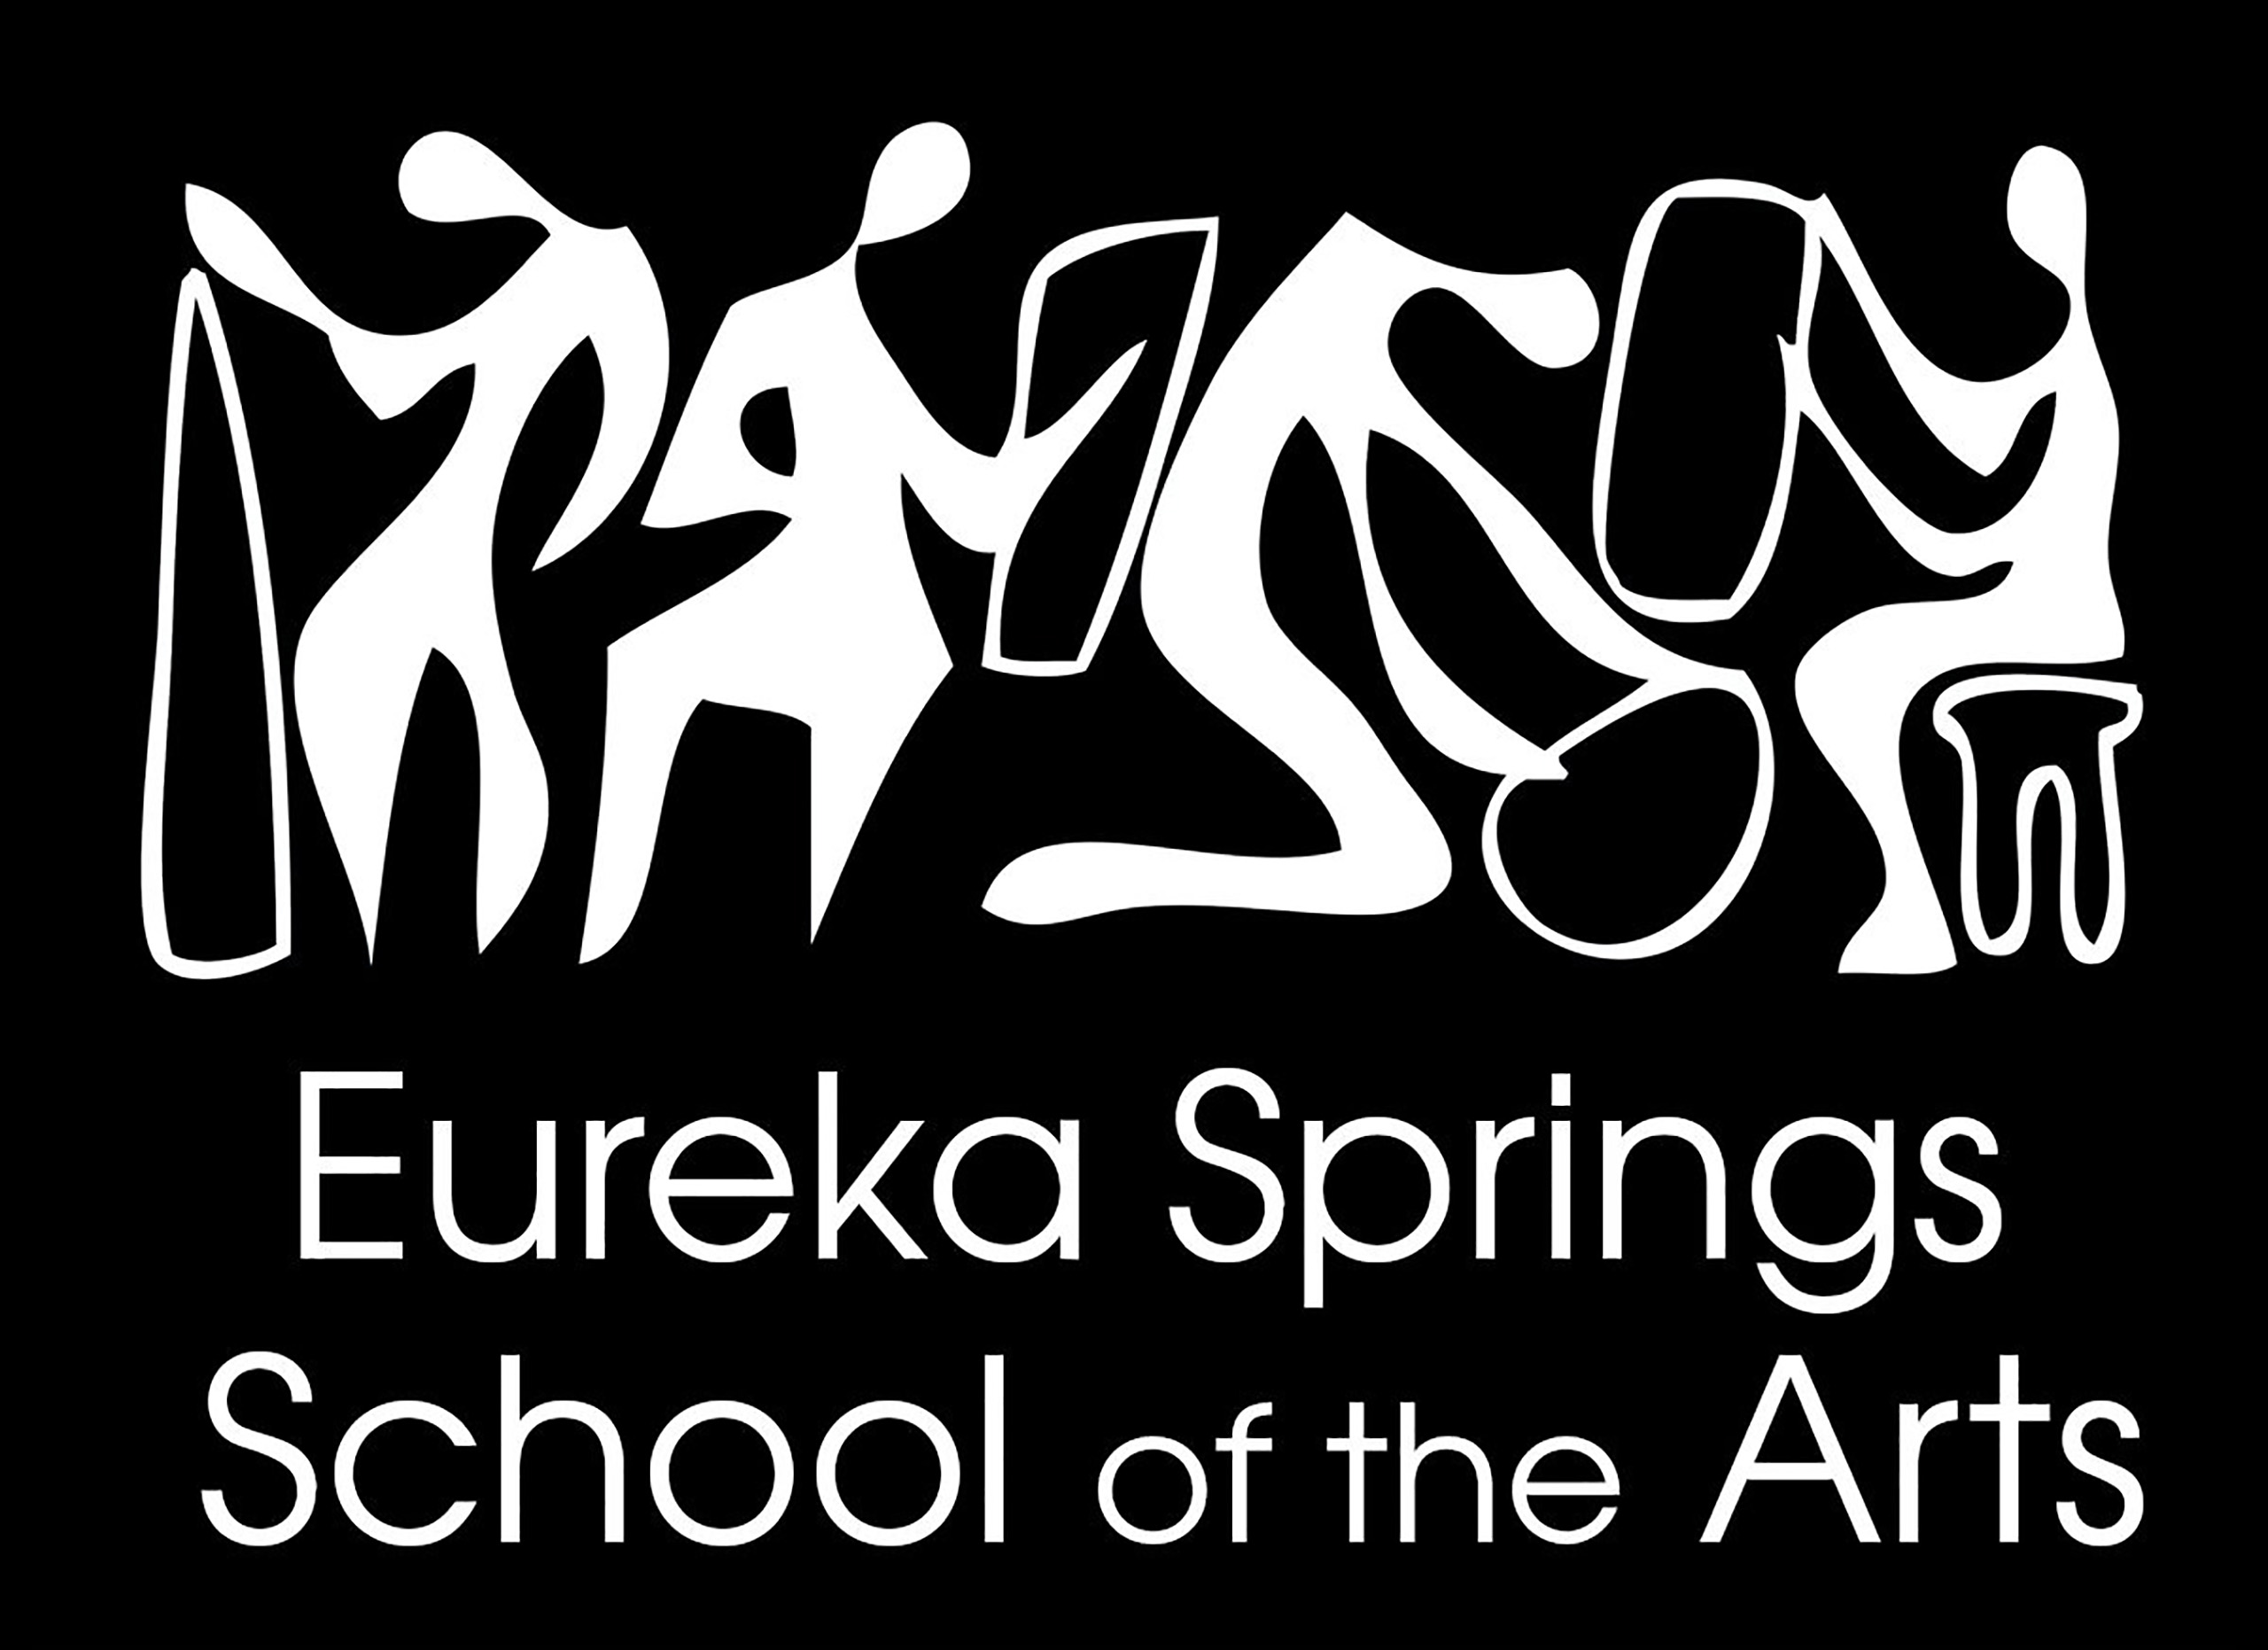 Eureka Springs School of Arts offers residencies in ceramics and woodworking. Apply now.